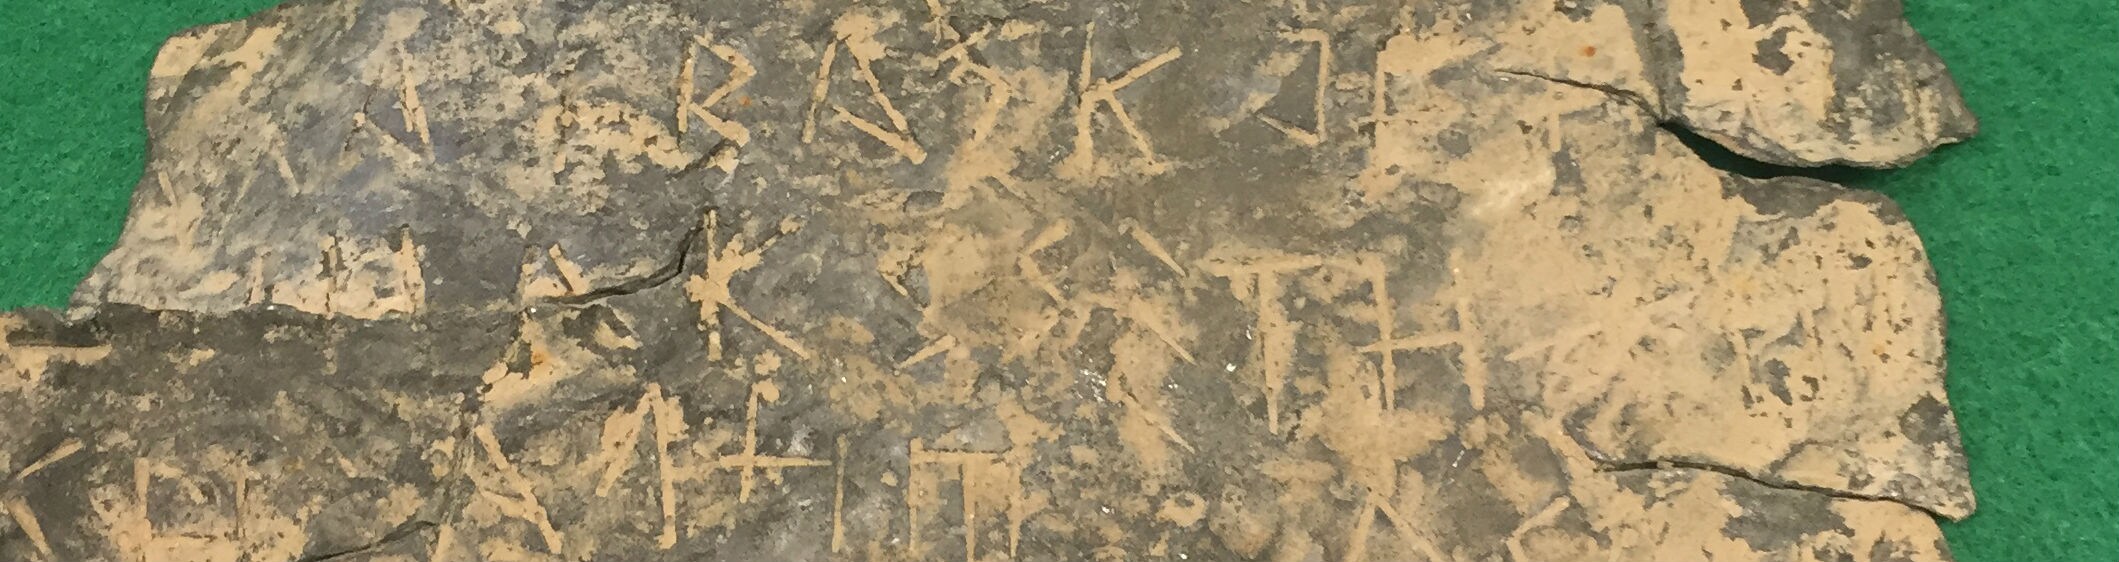 La lámina ibera escrita tiene una antigüedad aproximada de 24 siglos